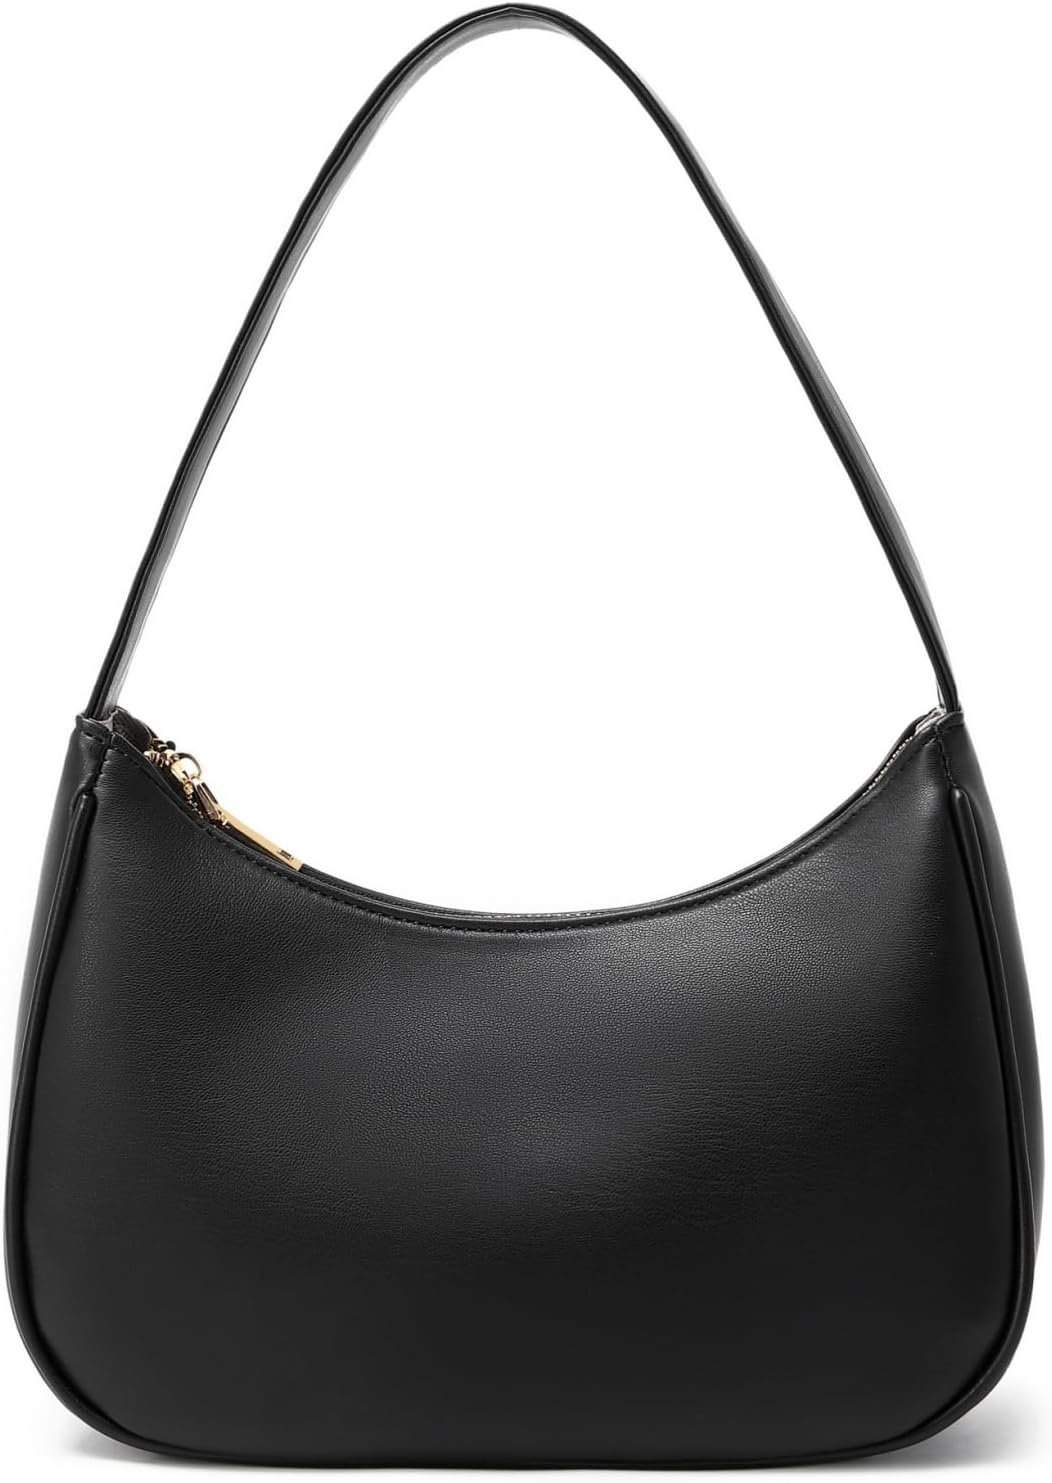 CYHTWSDJ Shoulder Bags for Women, Cute Hobo Tote Handbag Mini Clutch Purse with Zipper Closure